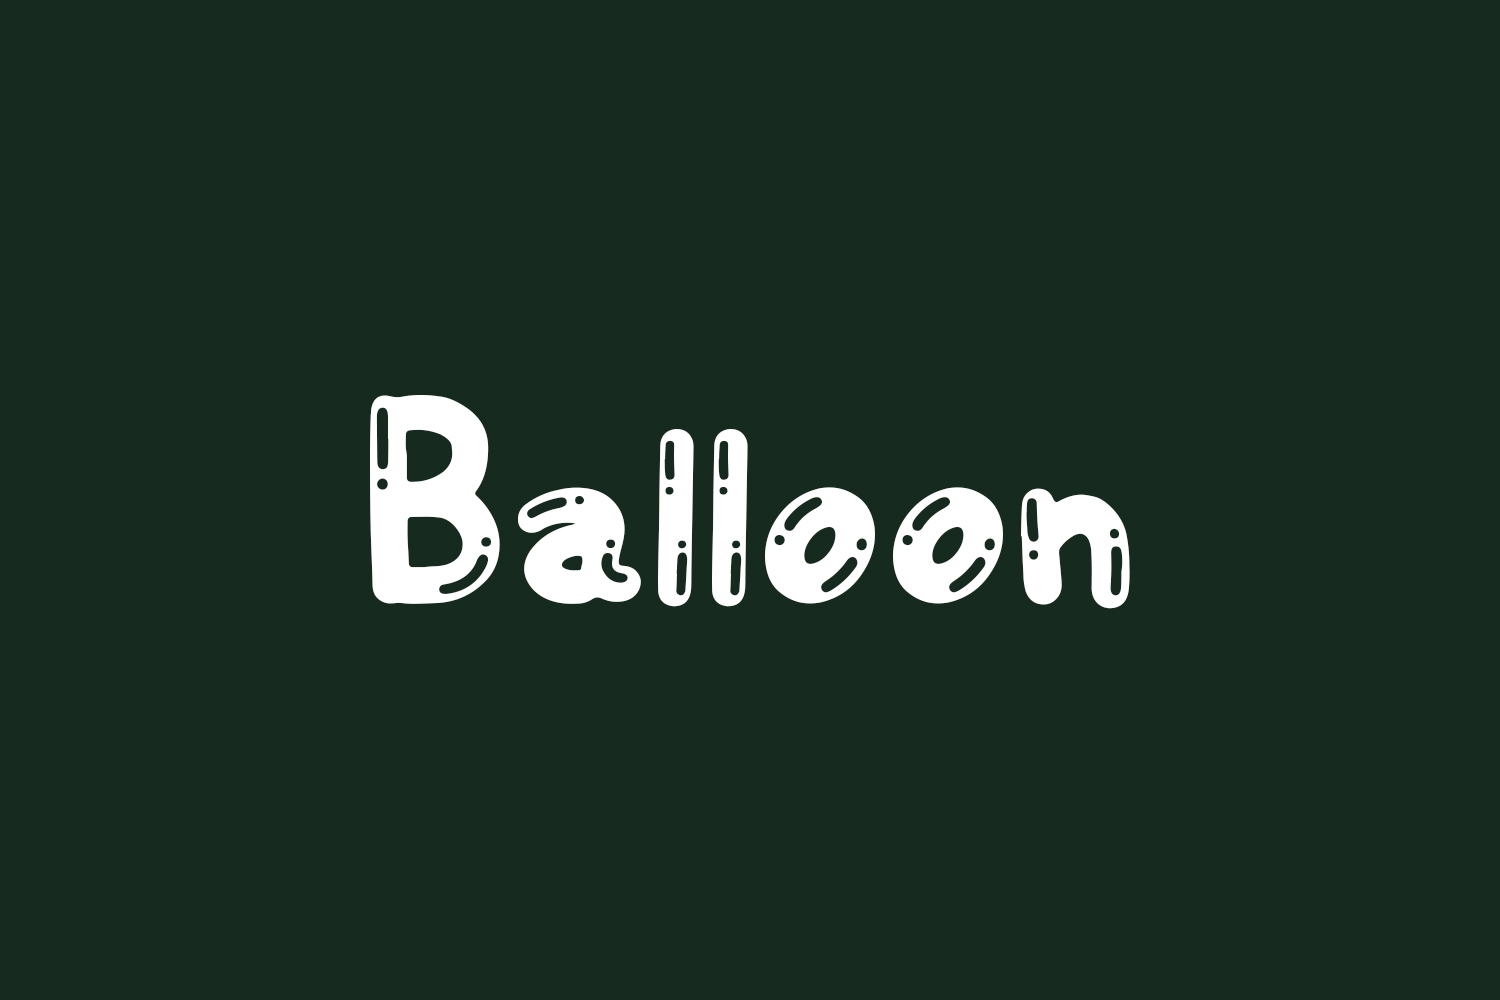 Balloon Free Font